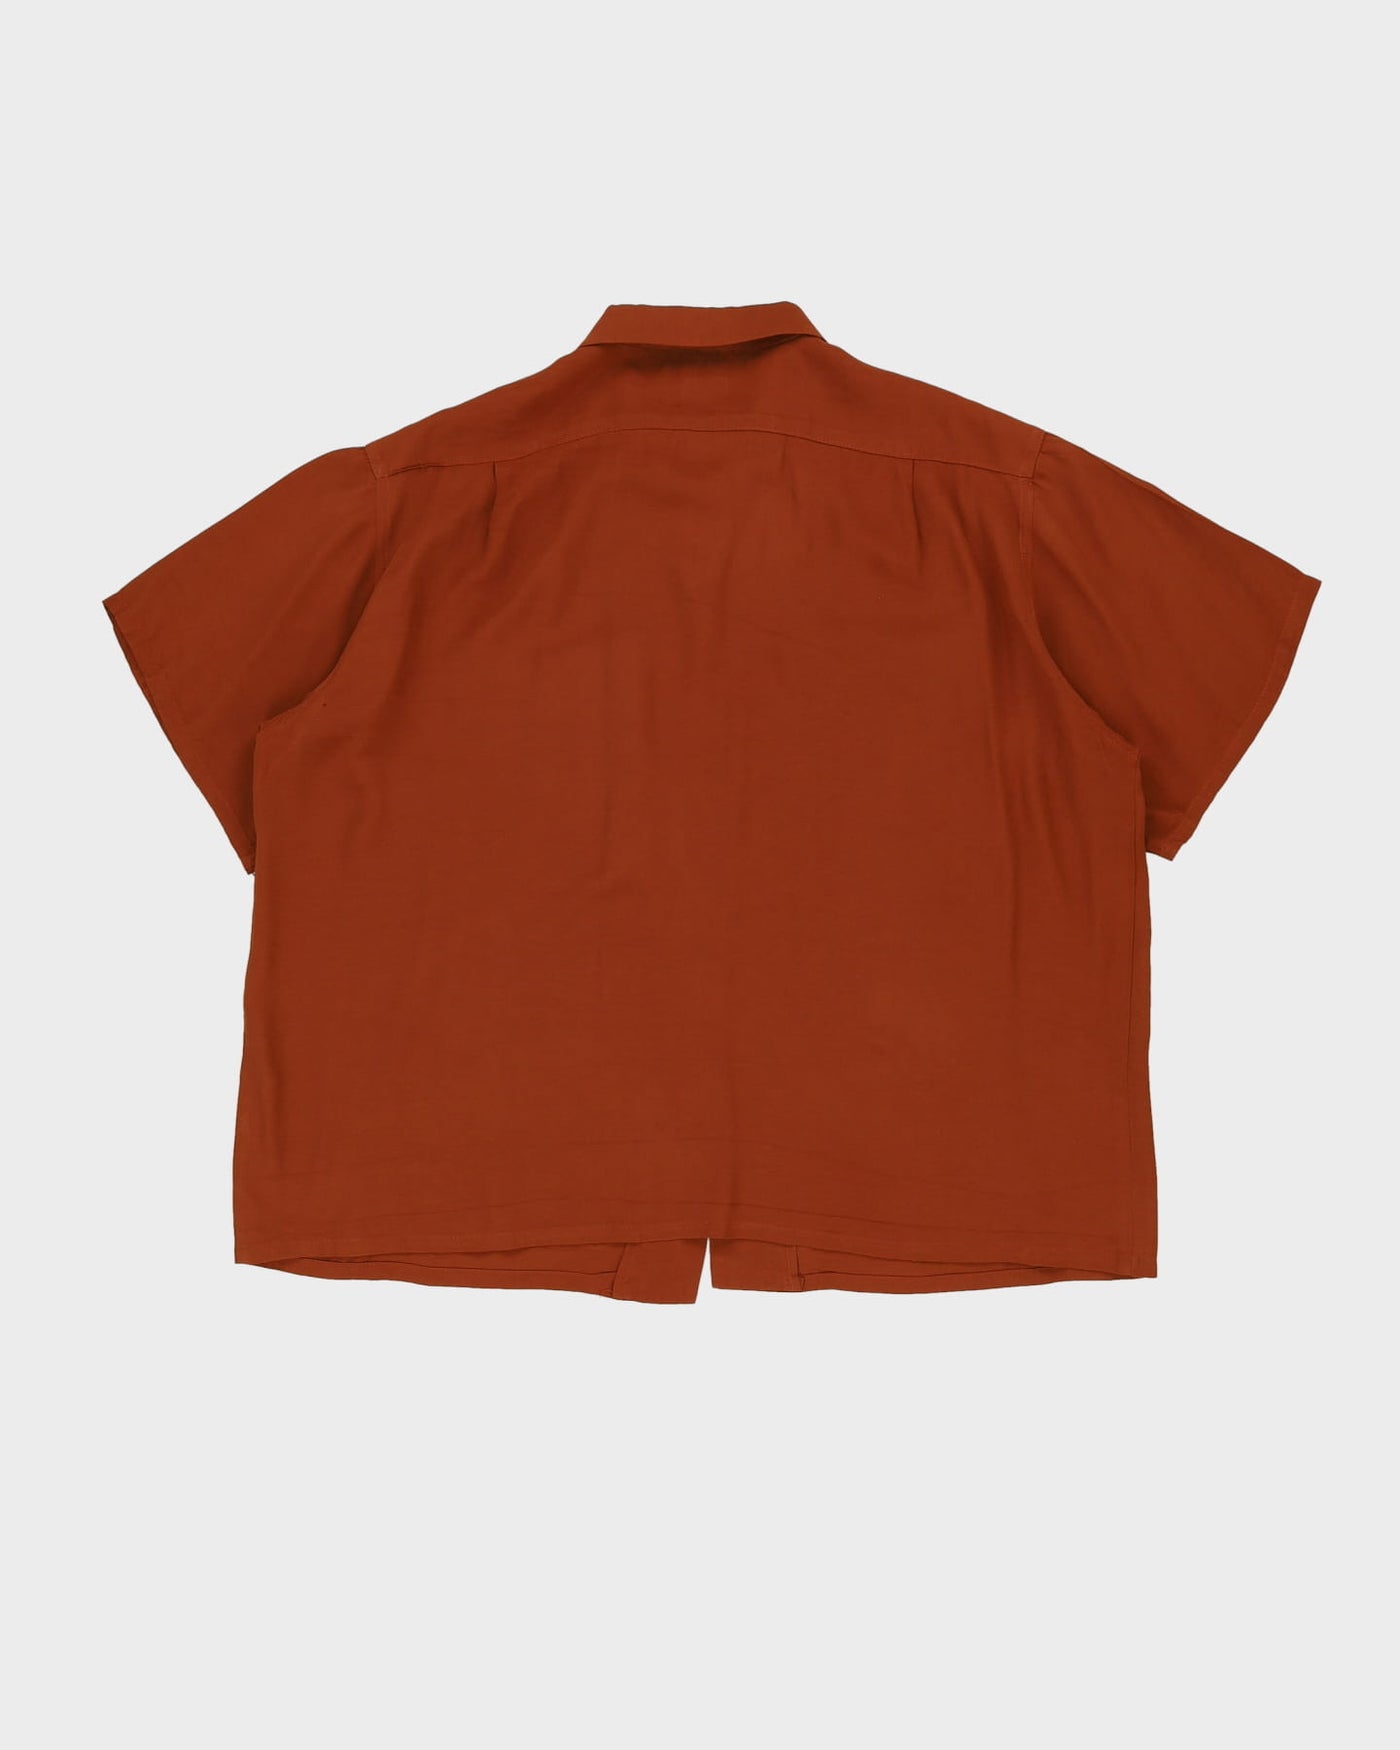 Vintage 1950s Brown Short Sleeve Shirt - XXXL